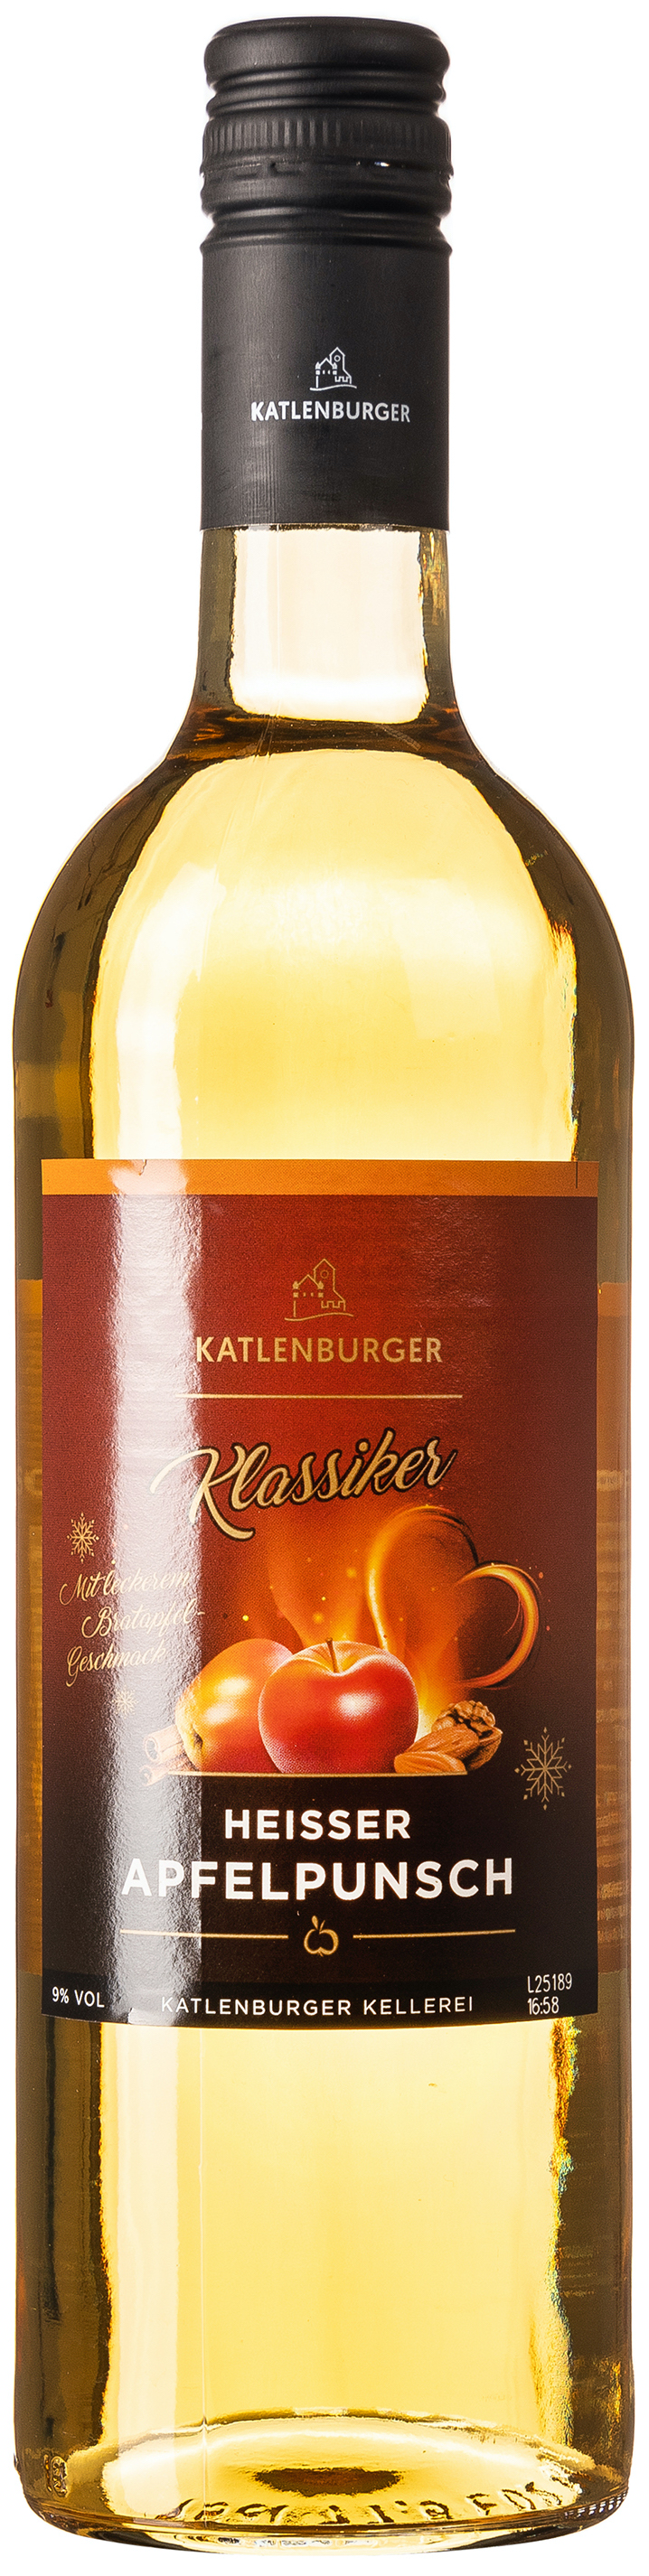 Katlenburger Heisser Apfelpunsch 9% vol. 0,75L